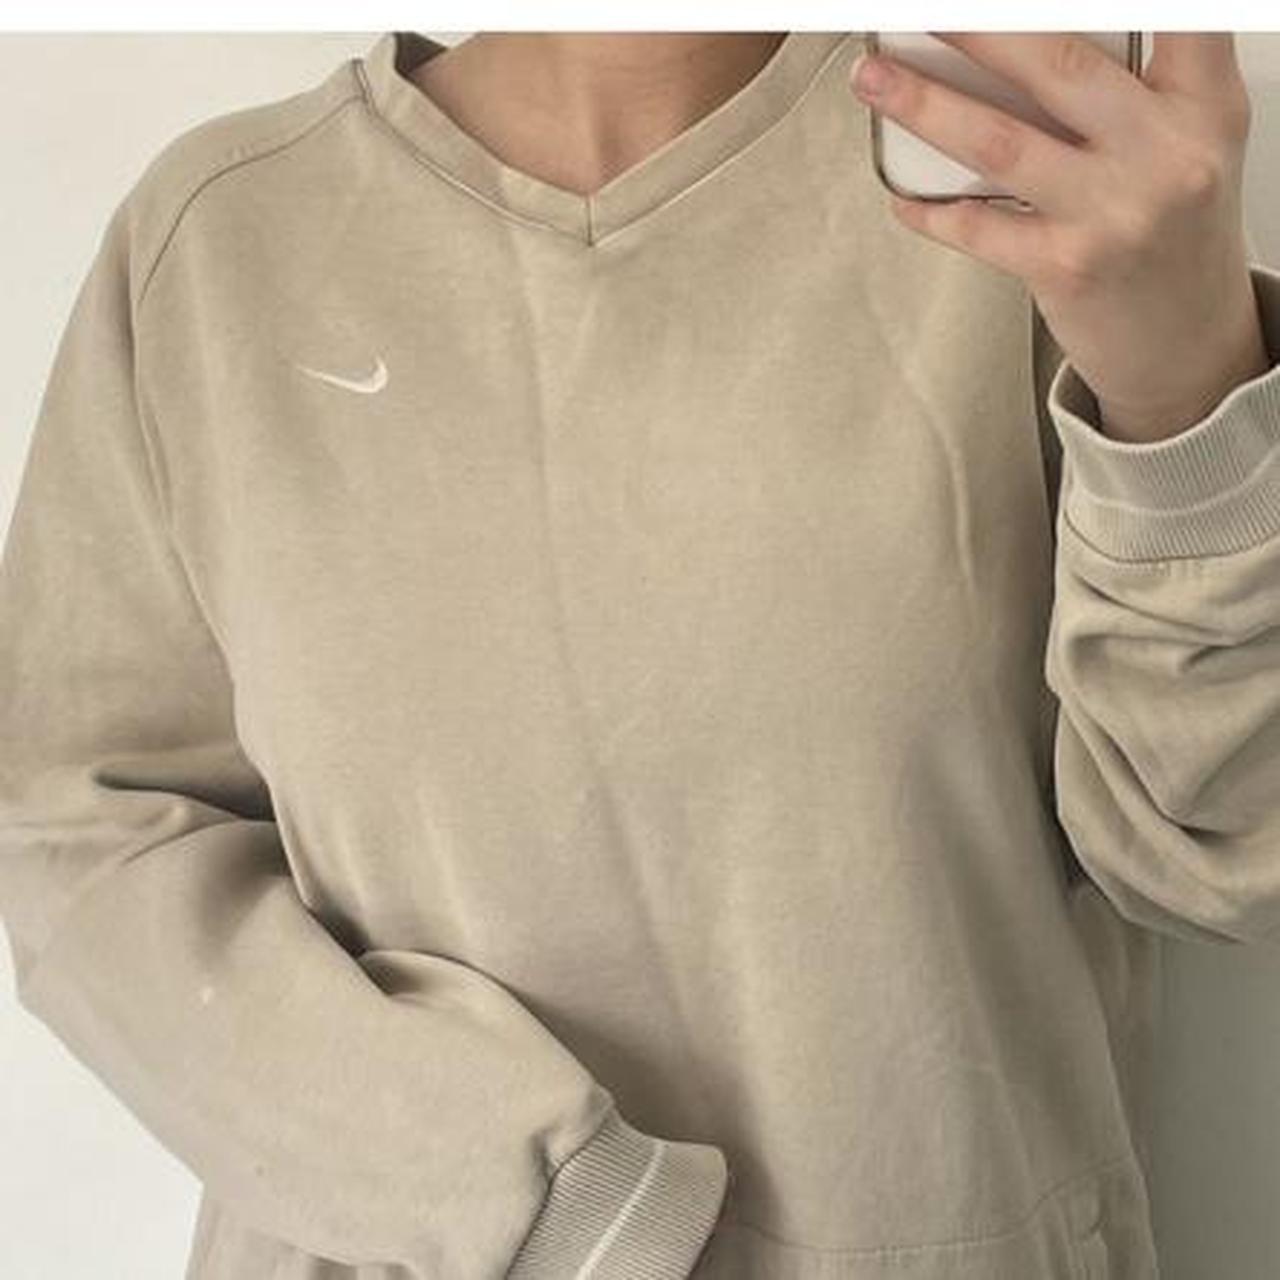 Tienda Rectángulo Subir Nike Women's Cream and Brown Sweatshirt | Depop